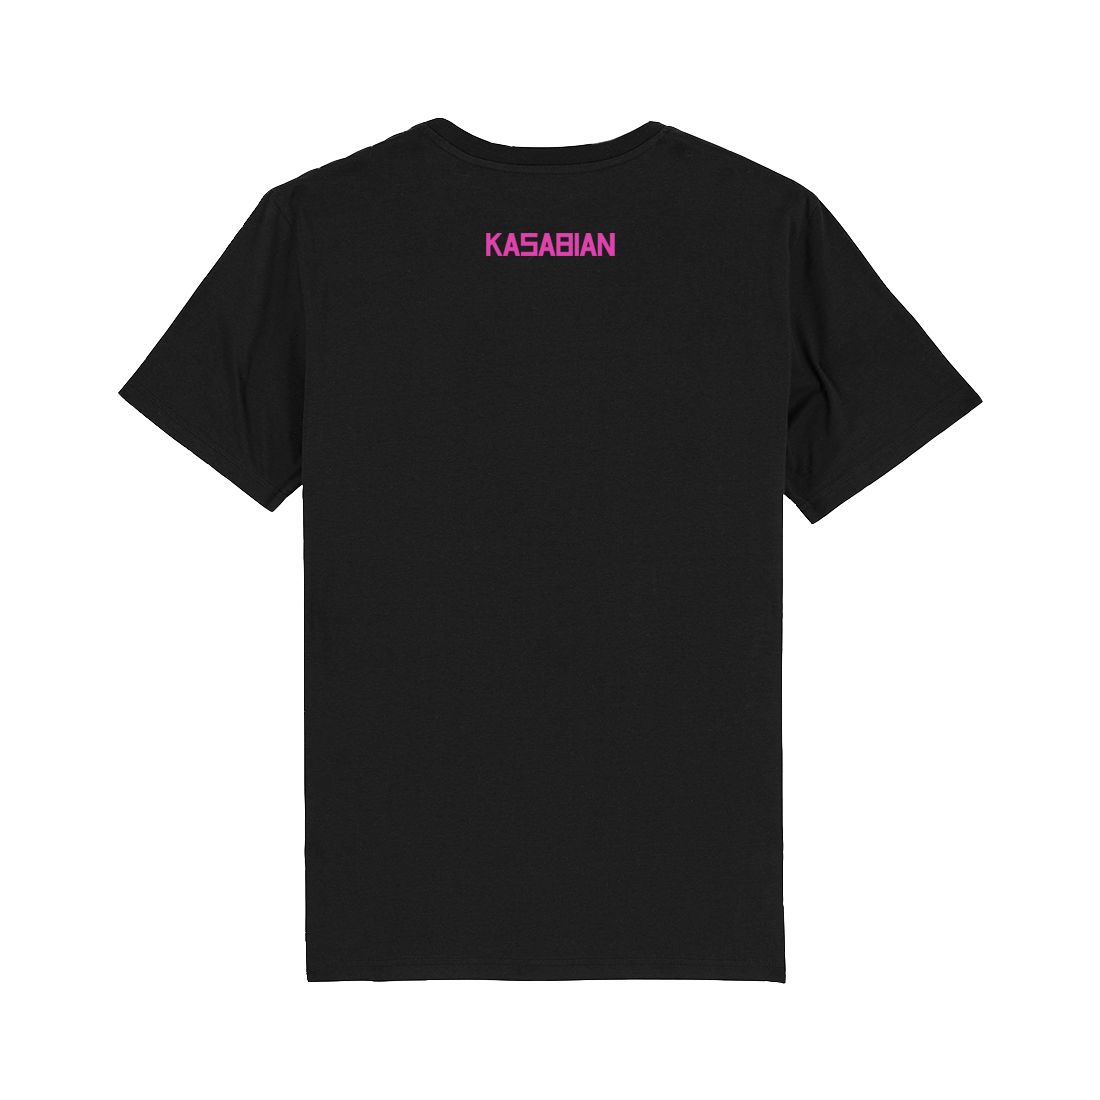 Kasabian Black 48:13 T-Shirt